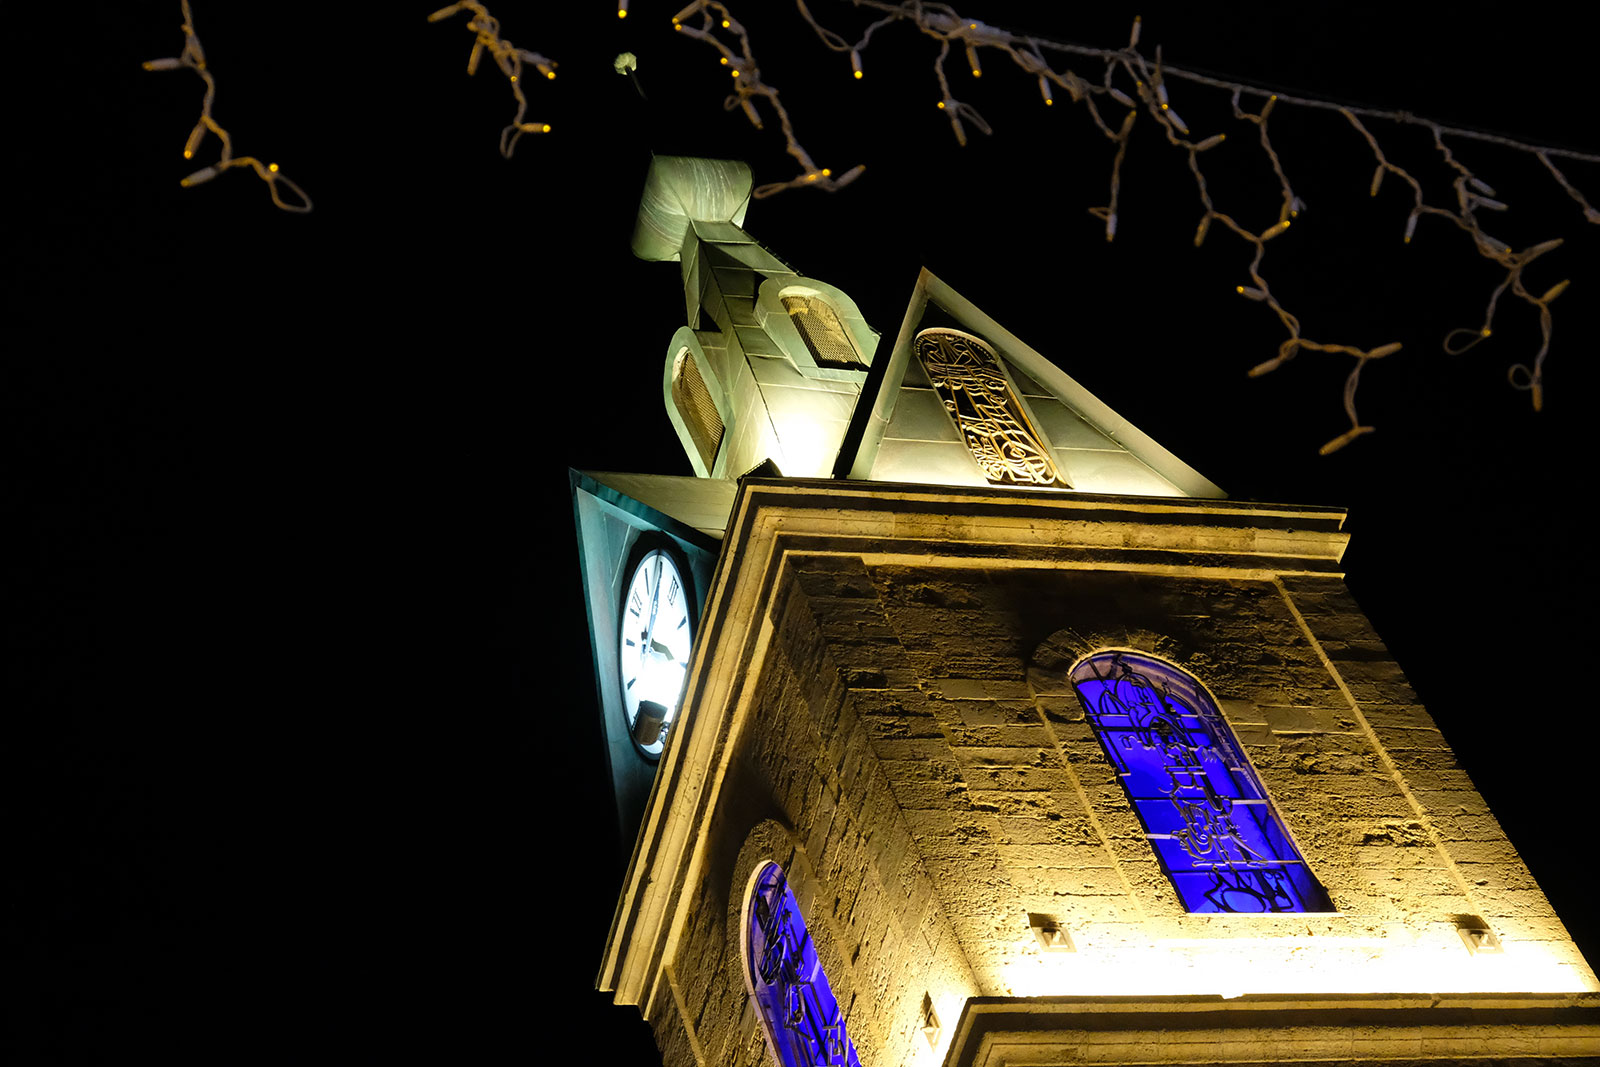 Visit the Jaffa clocktower